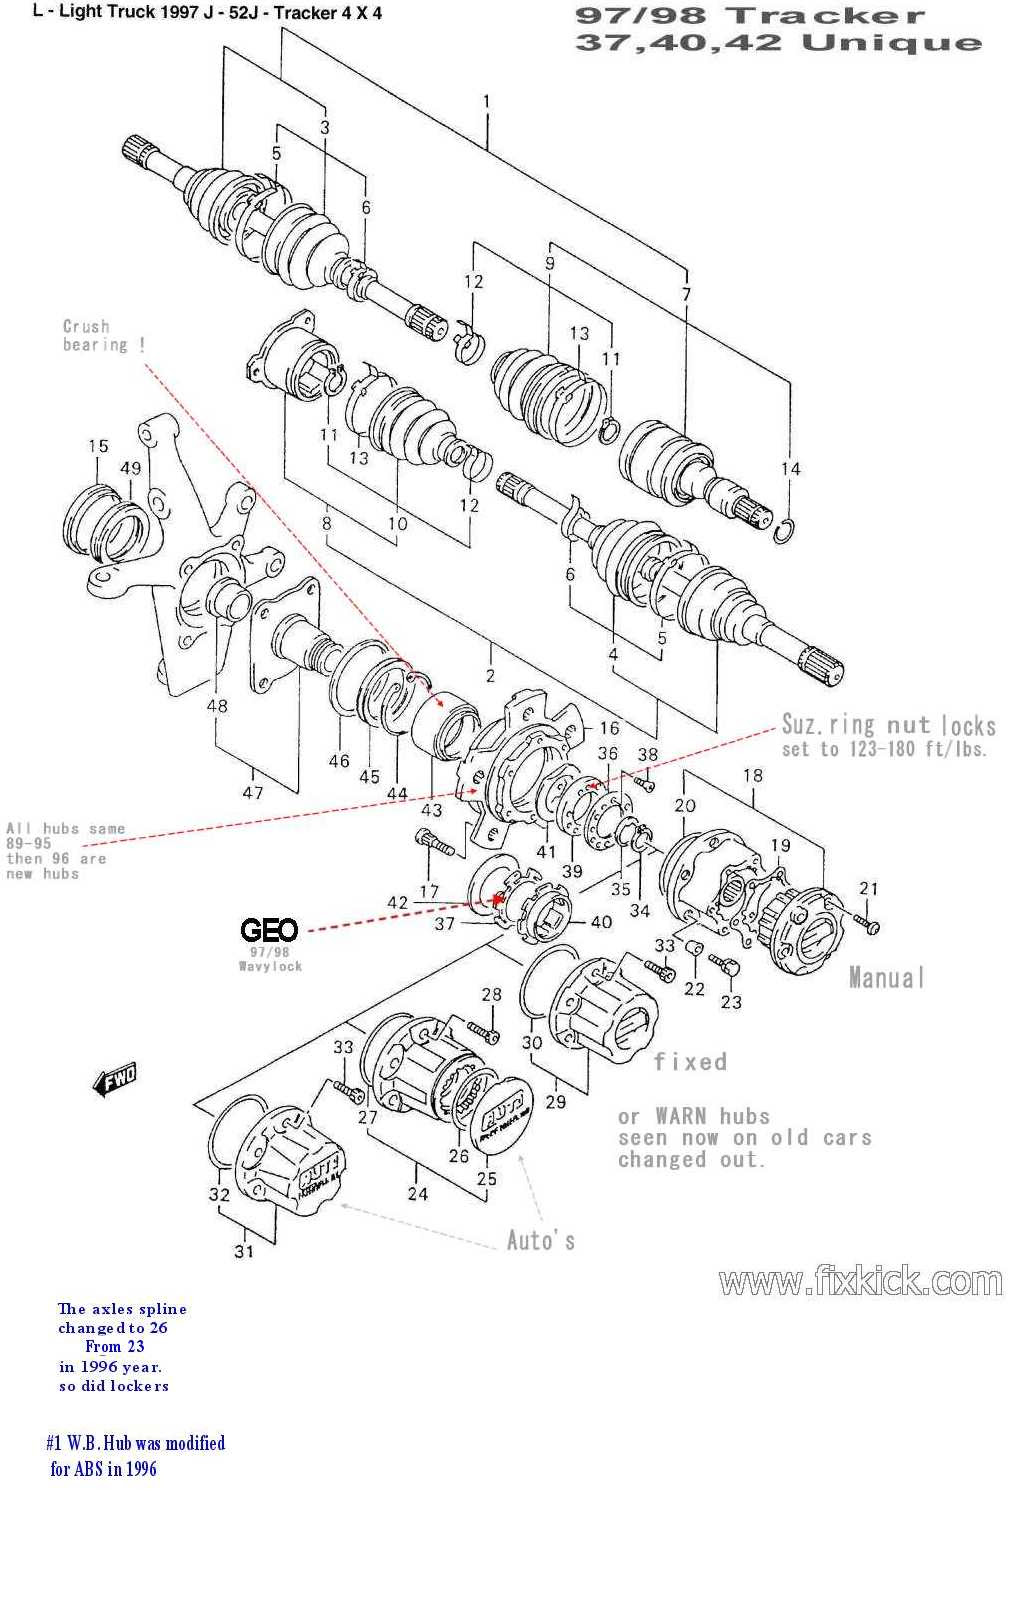 Chevrolet Tracker Wiring Diagram Body - Wiring Diagram